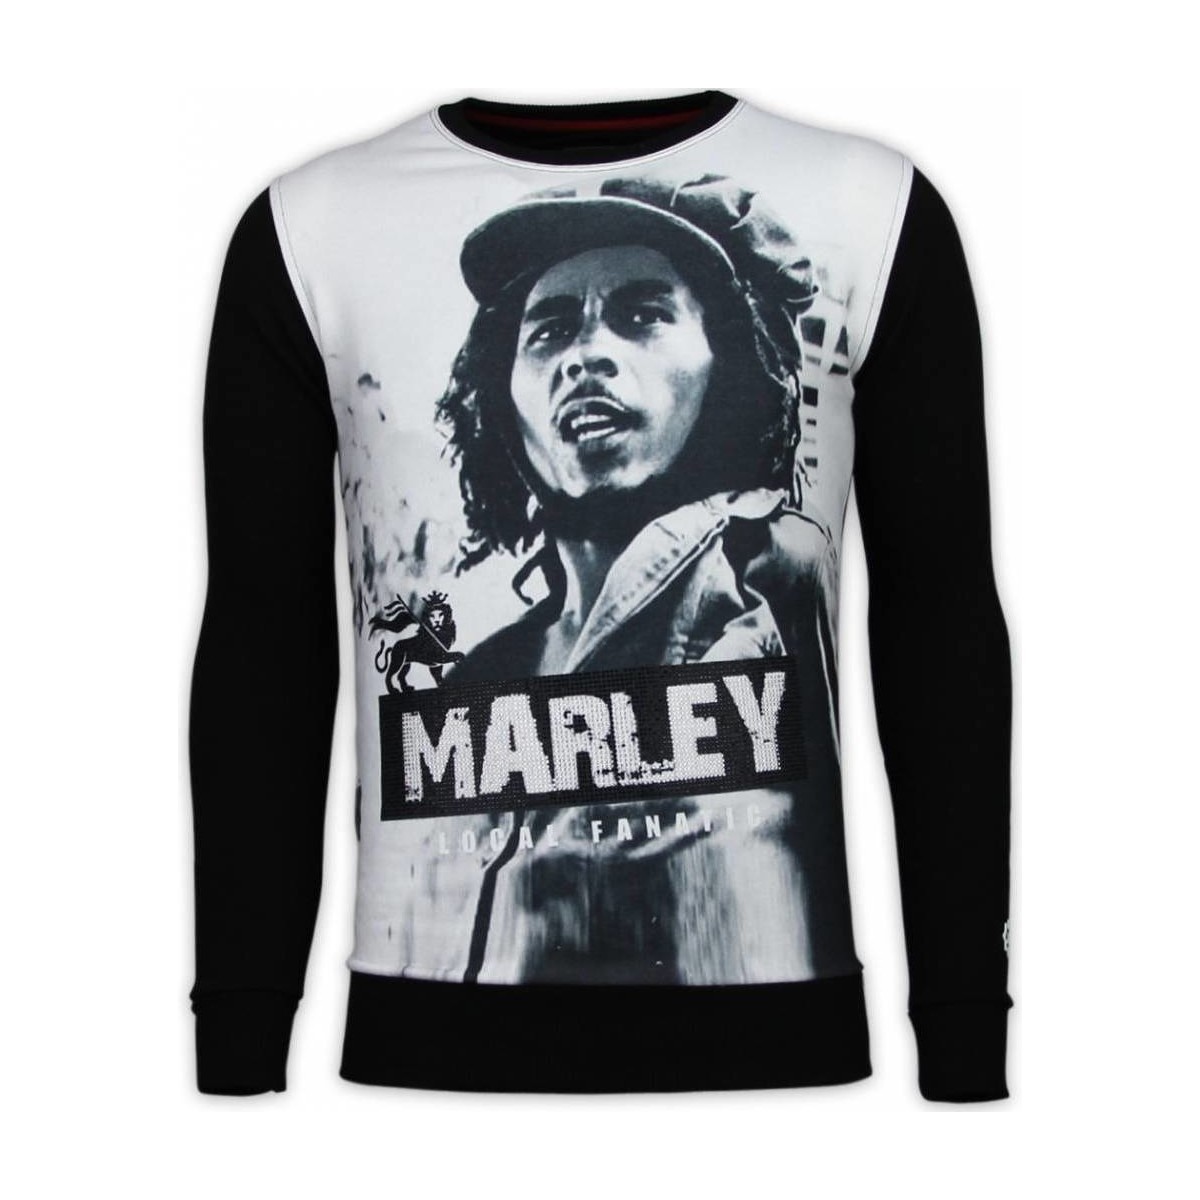 textil Herr Sweatshirts Local Fanatic Bob Marley Digital Rhinestone Svart